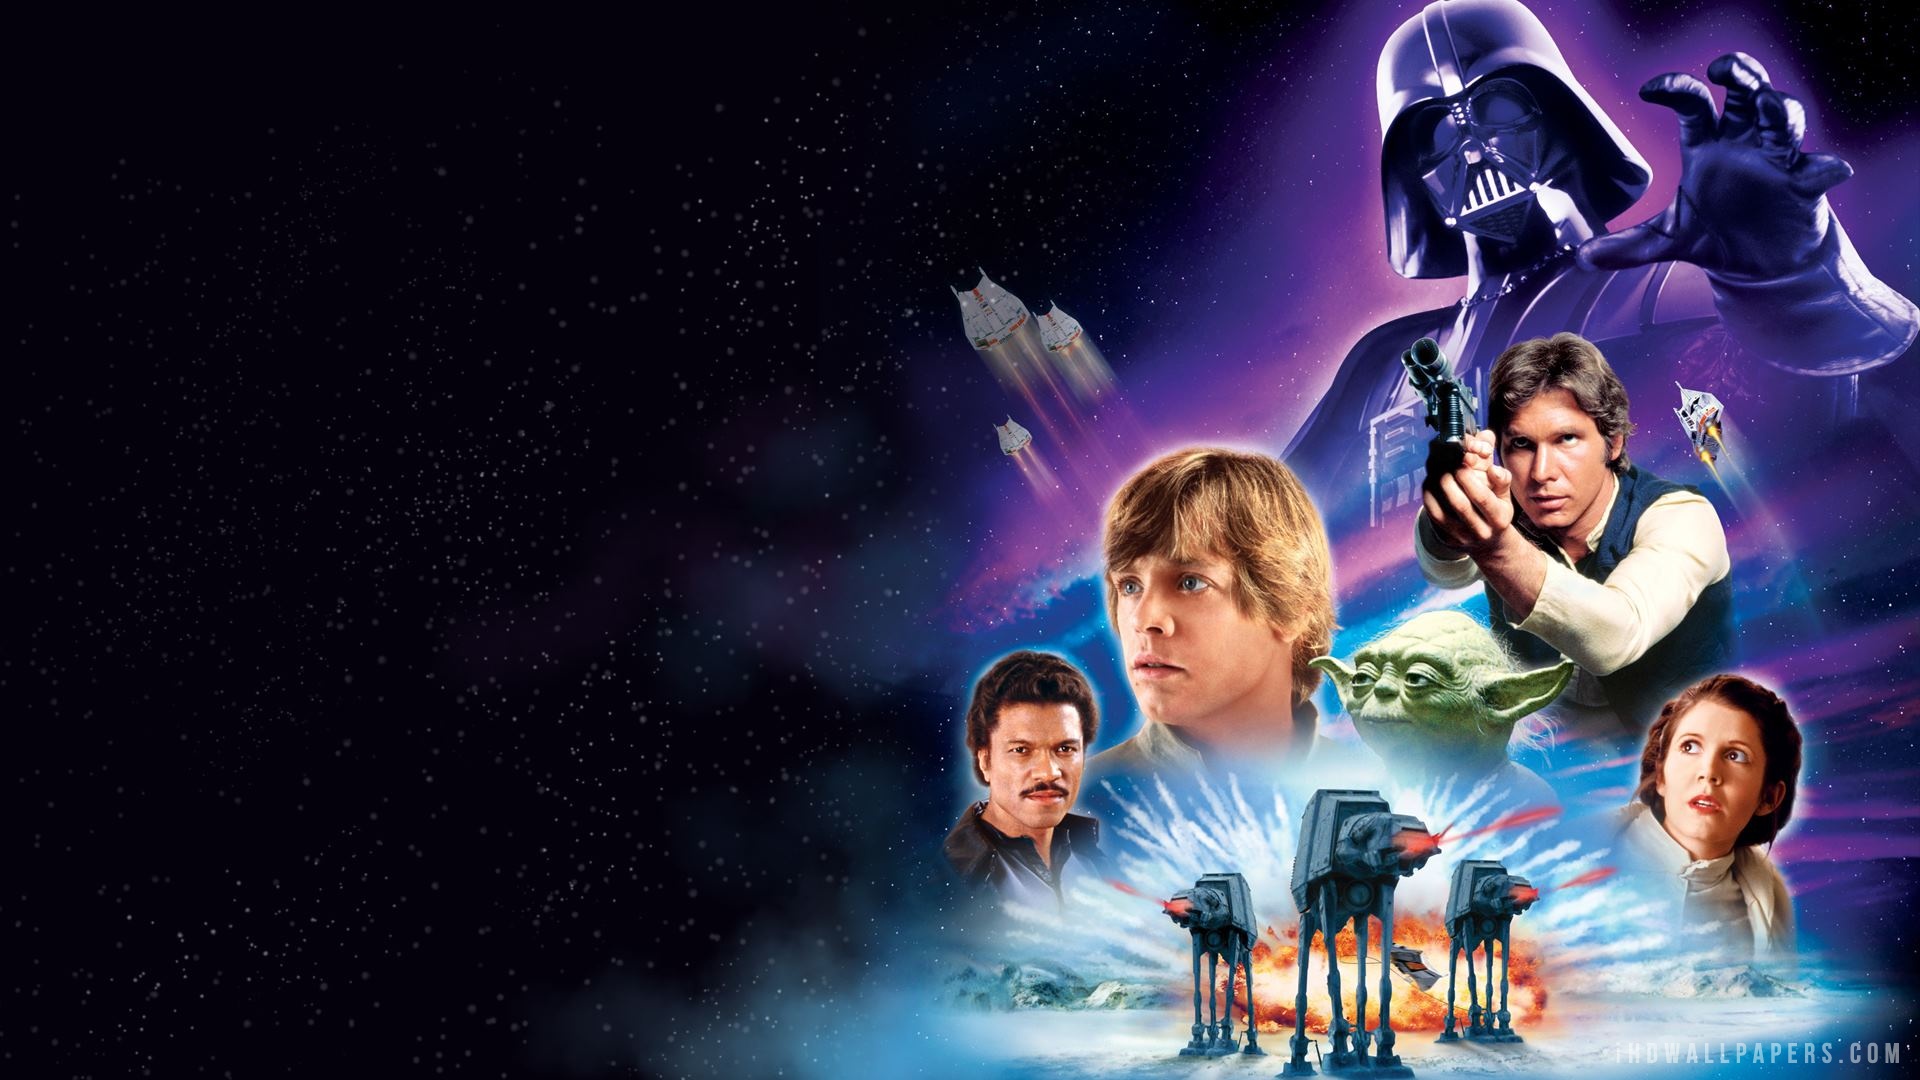 Star Wars Episode V The Empire Strikes Back Wallpaper Background